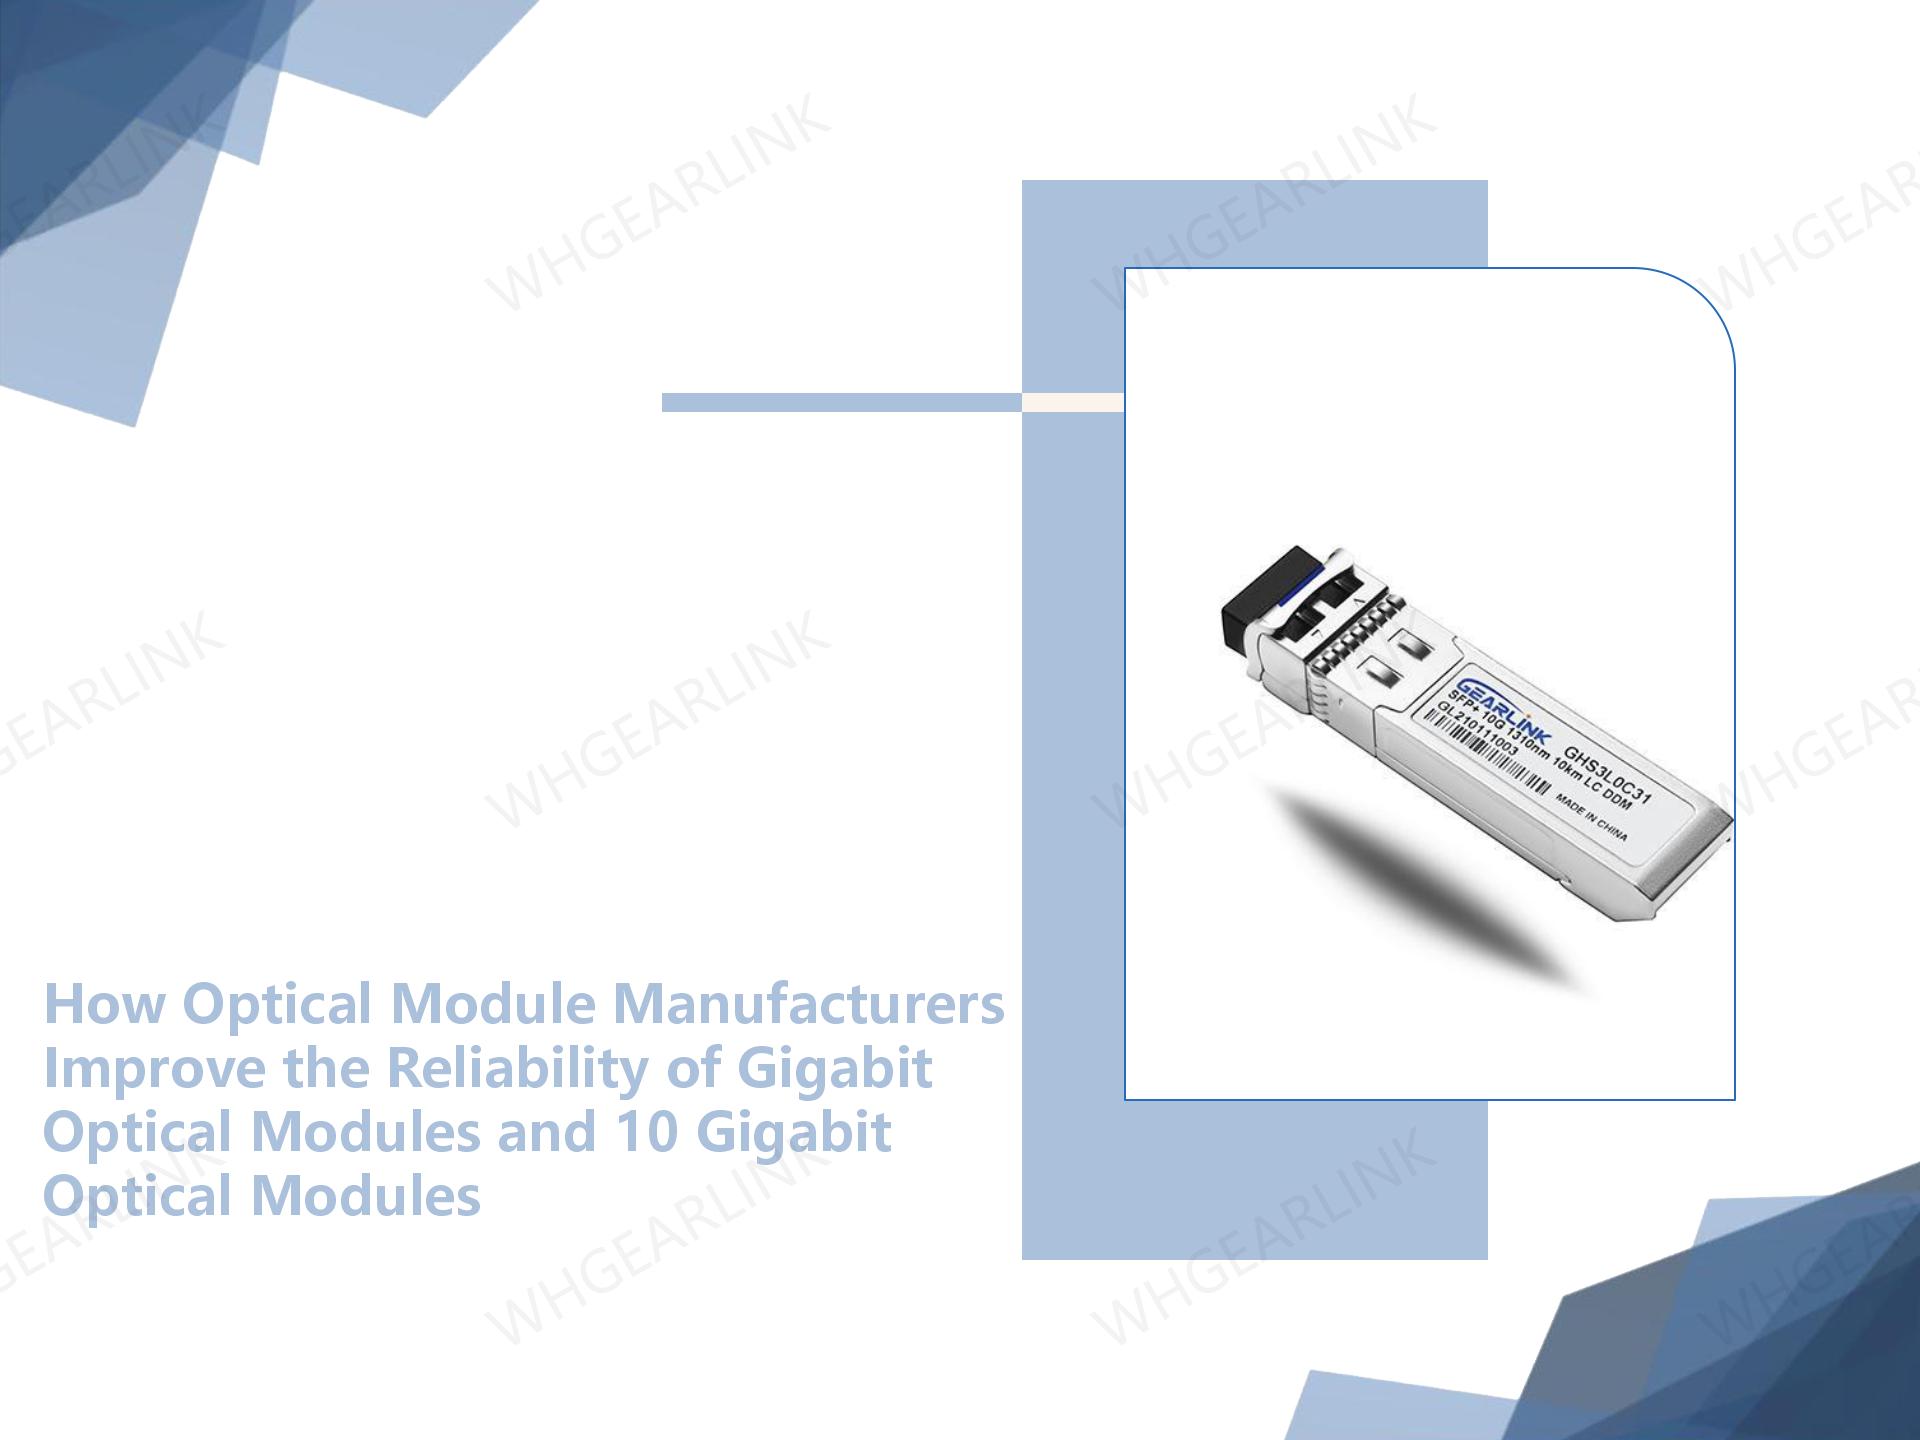 How Optical Module Manufacturers Improve the Reliability of Gigabit Optical Modules and 10 Gigabit Optical Modules